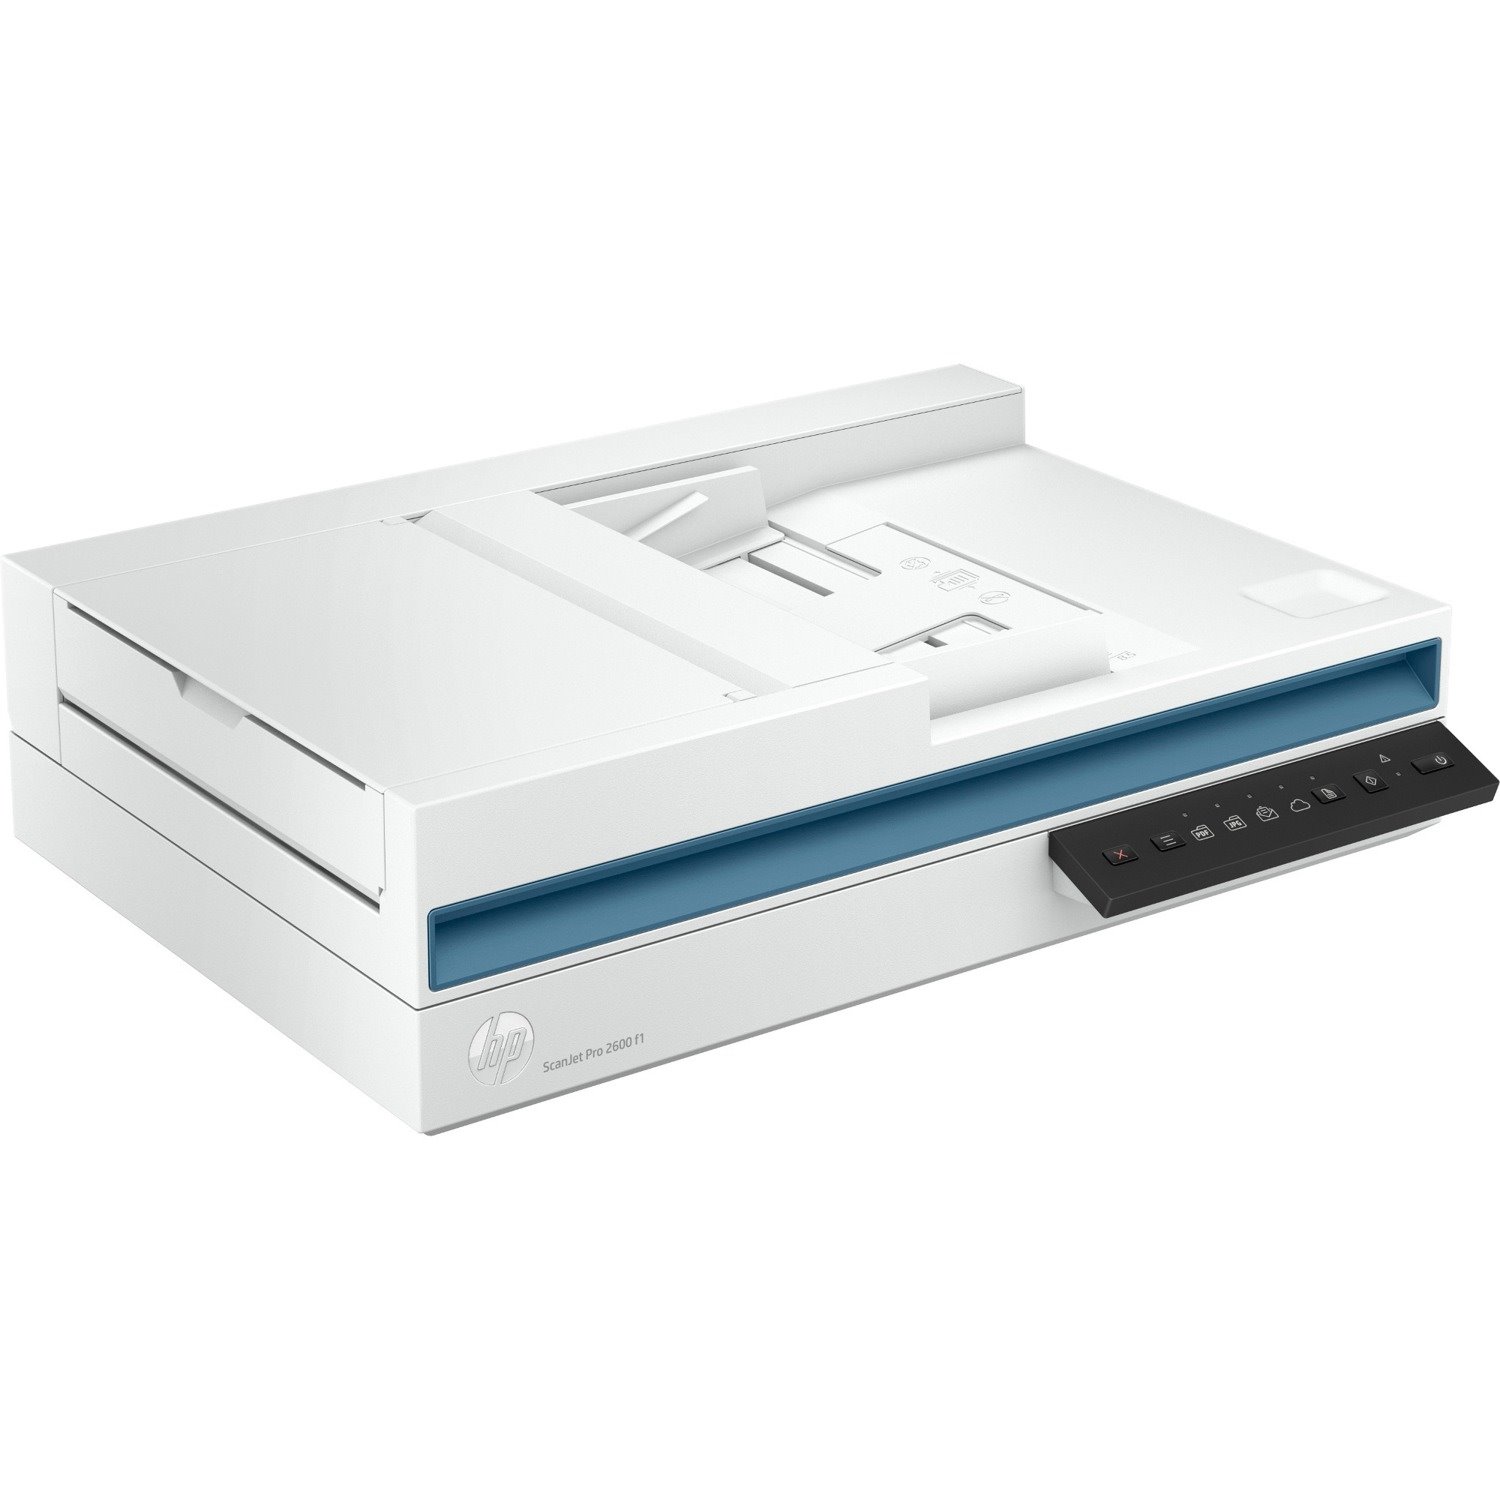 HP ScanJet Pro 2600 f1 ADF Scanner - 600 x 600 dpi Optical